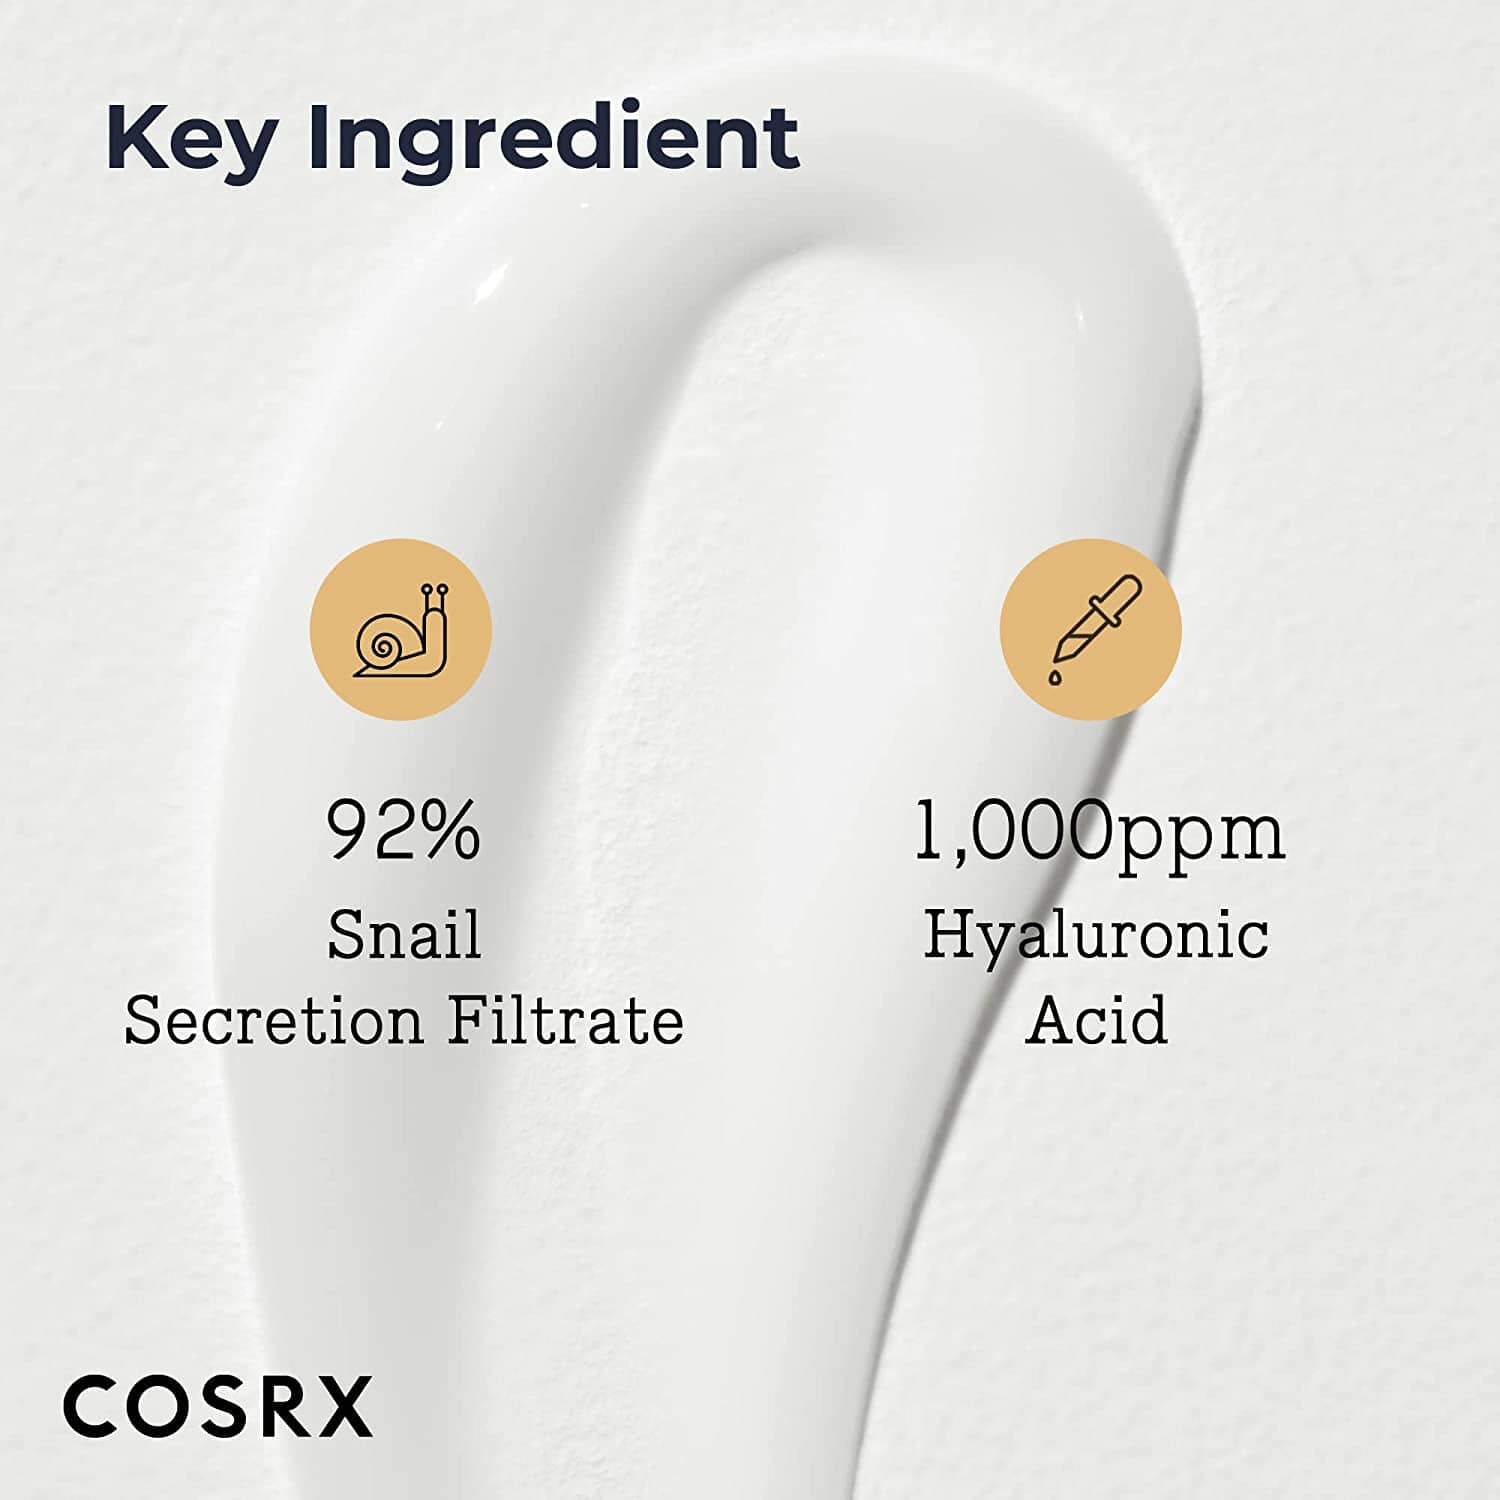 COSRX Skin Cycling Routine - Snail Mucin 92% Cream + Retinol 0.1 Cream, Recovery Set Skin Care COSRX ORION XO Sri Lanka